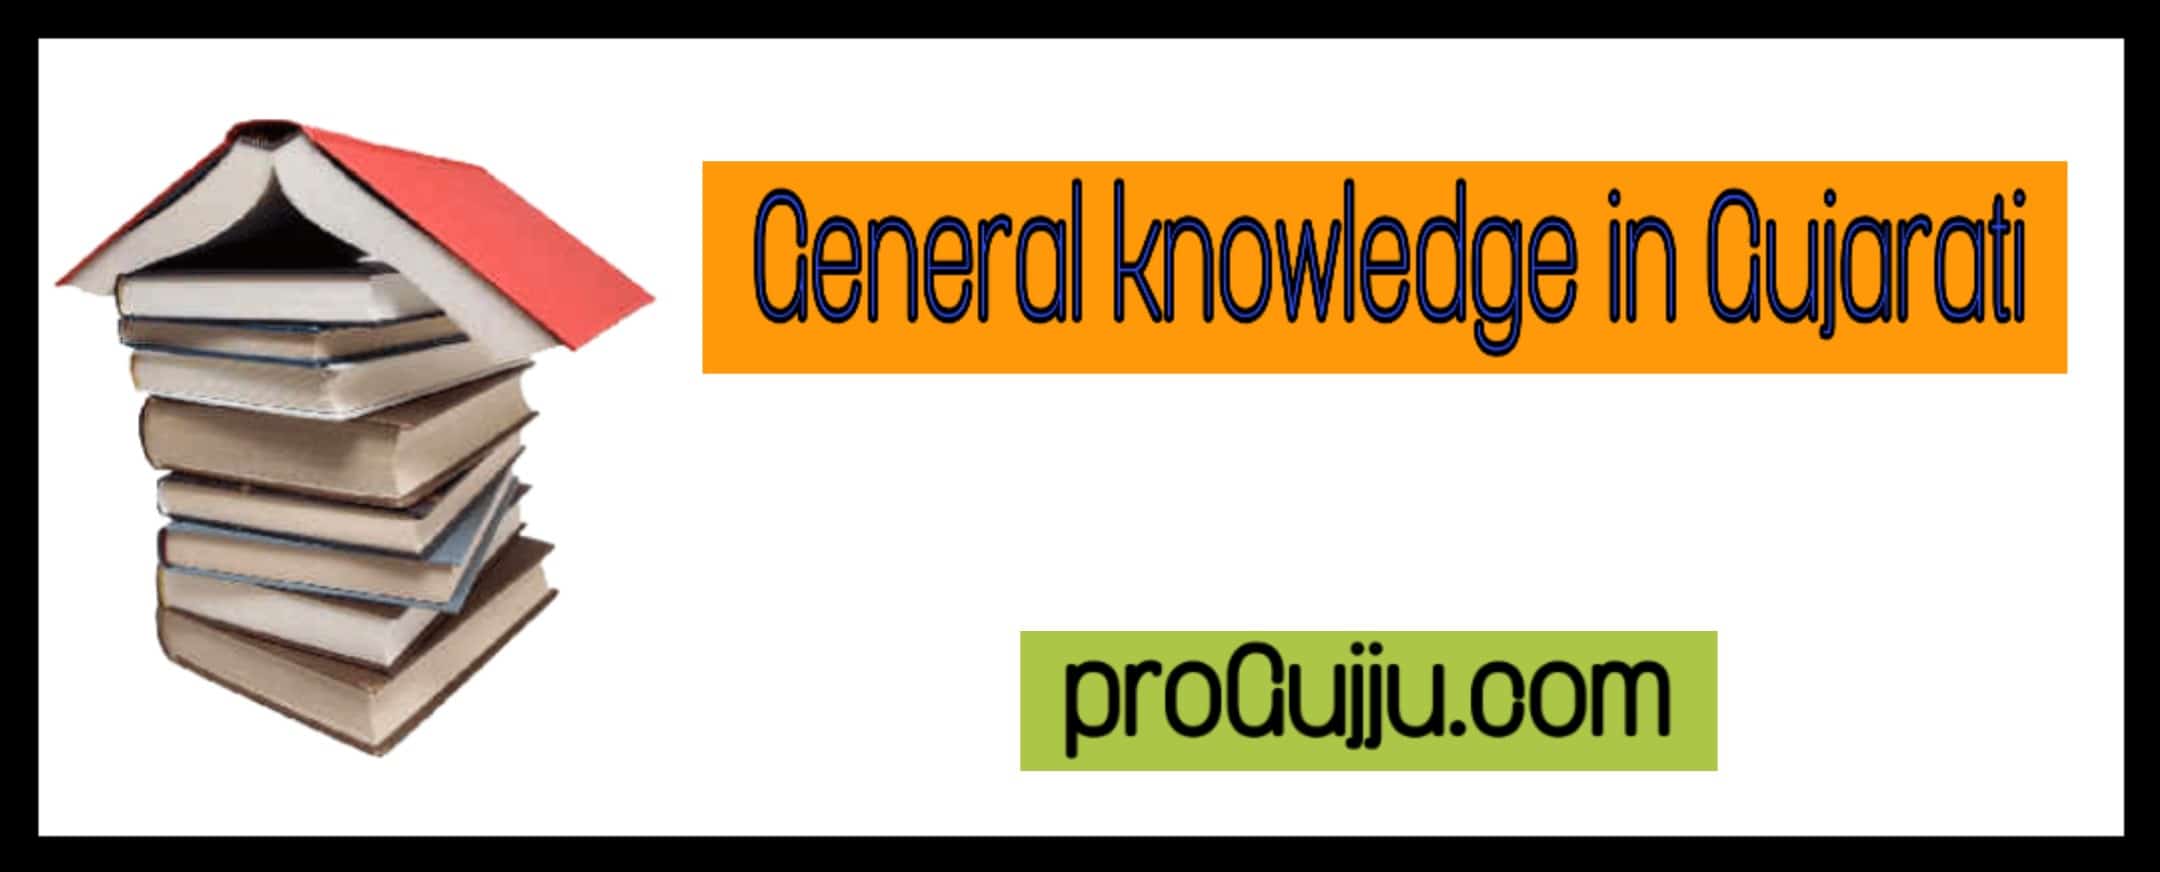 General knowledge pdf